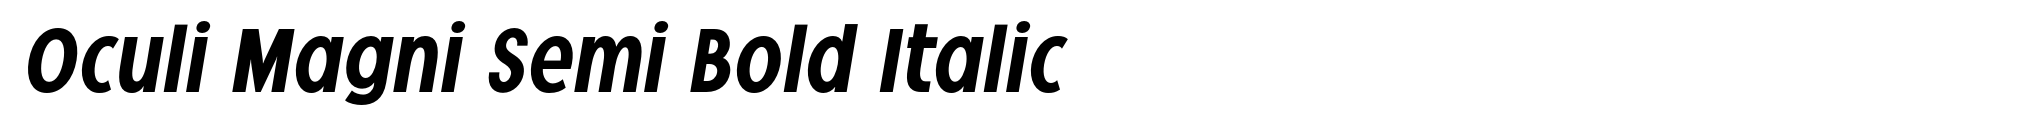 Oculi Magni Semi Bold Italic image